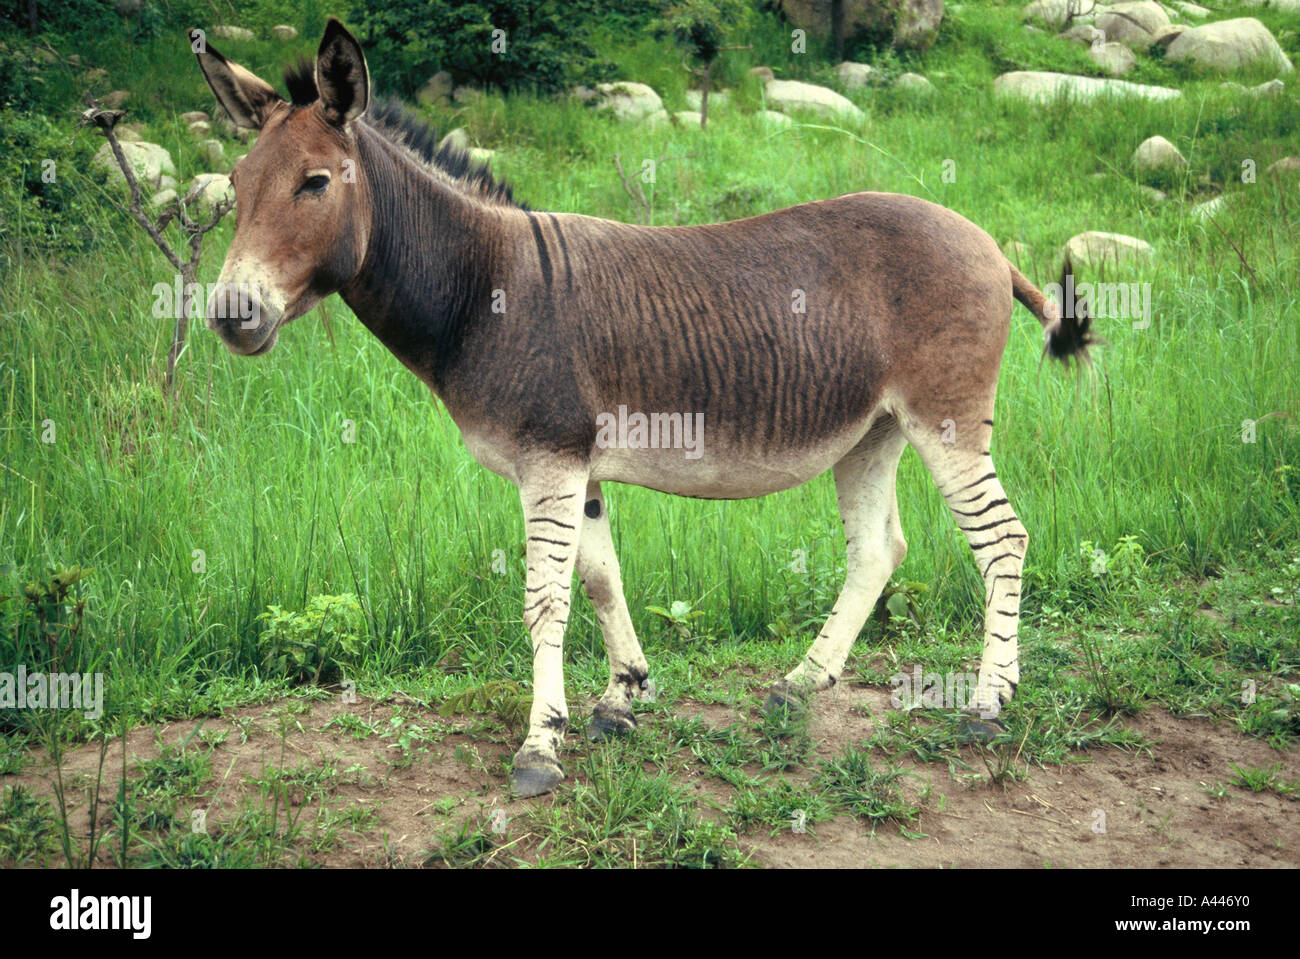 Zebra/Donkey Cross breed Stock Photo